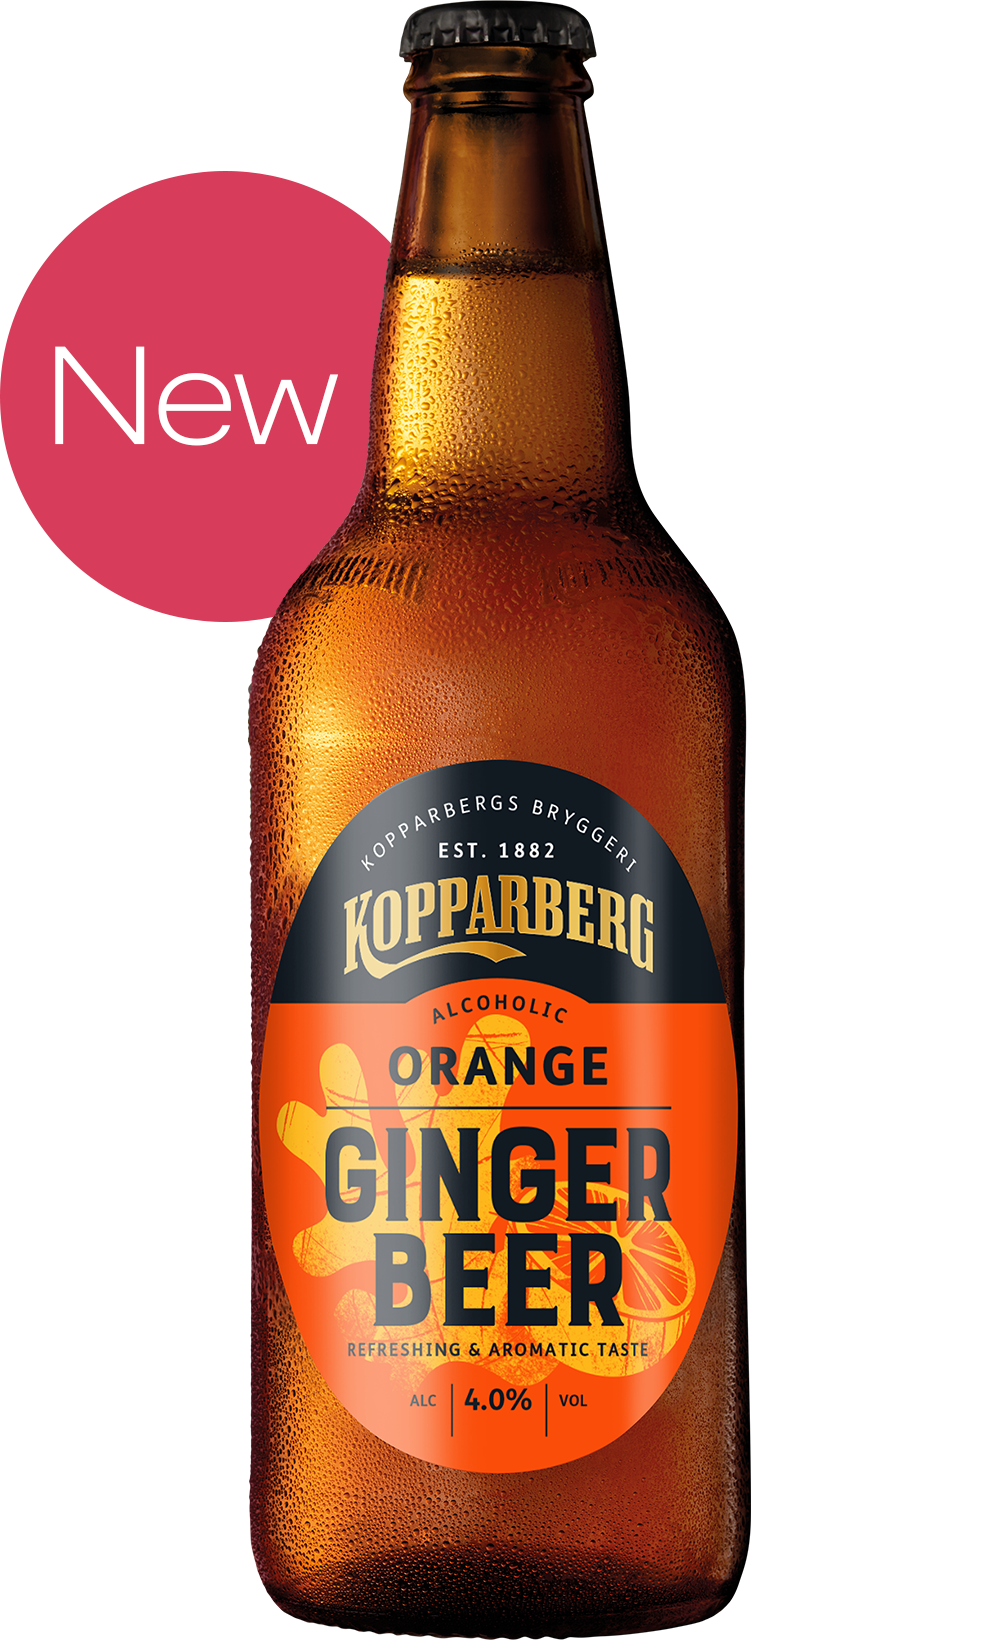 Orange Ginger Beer – Kopparberg